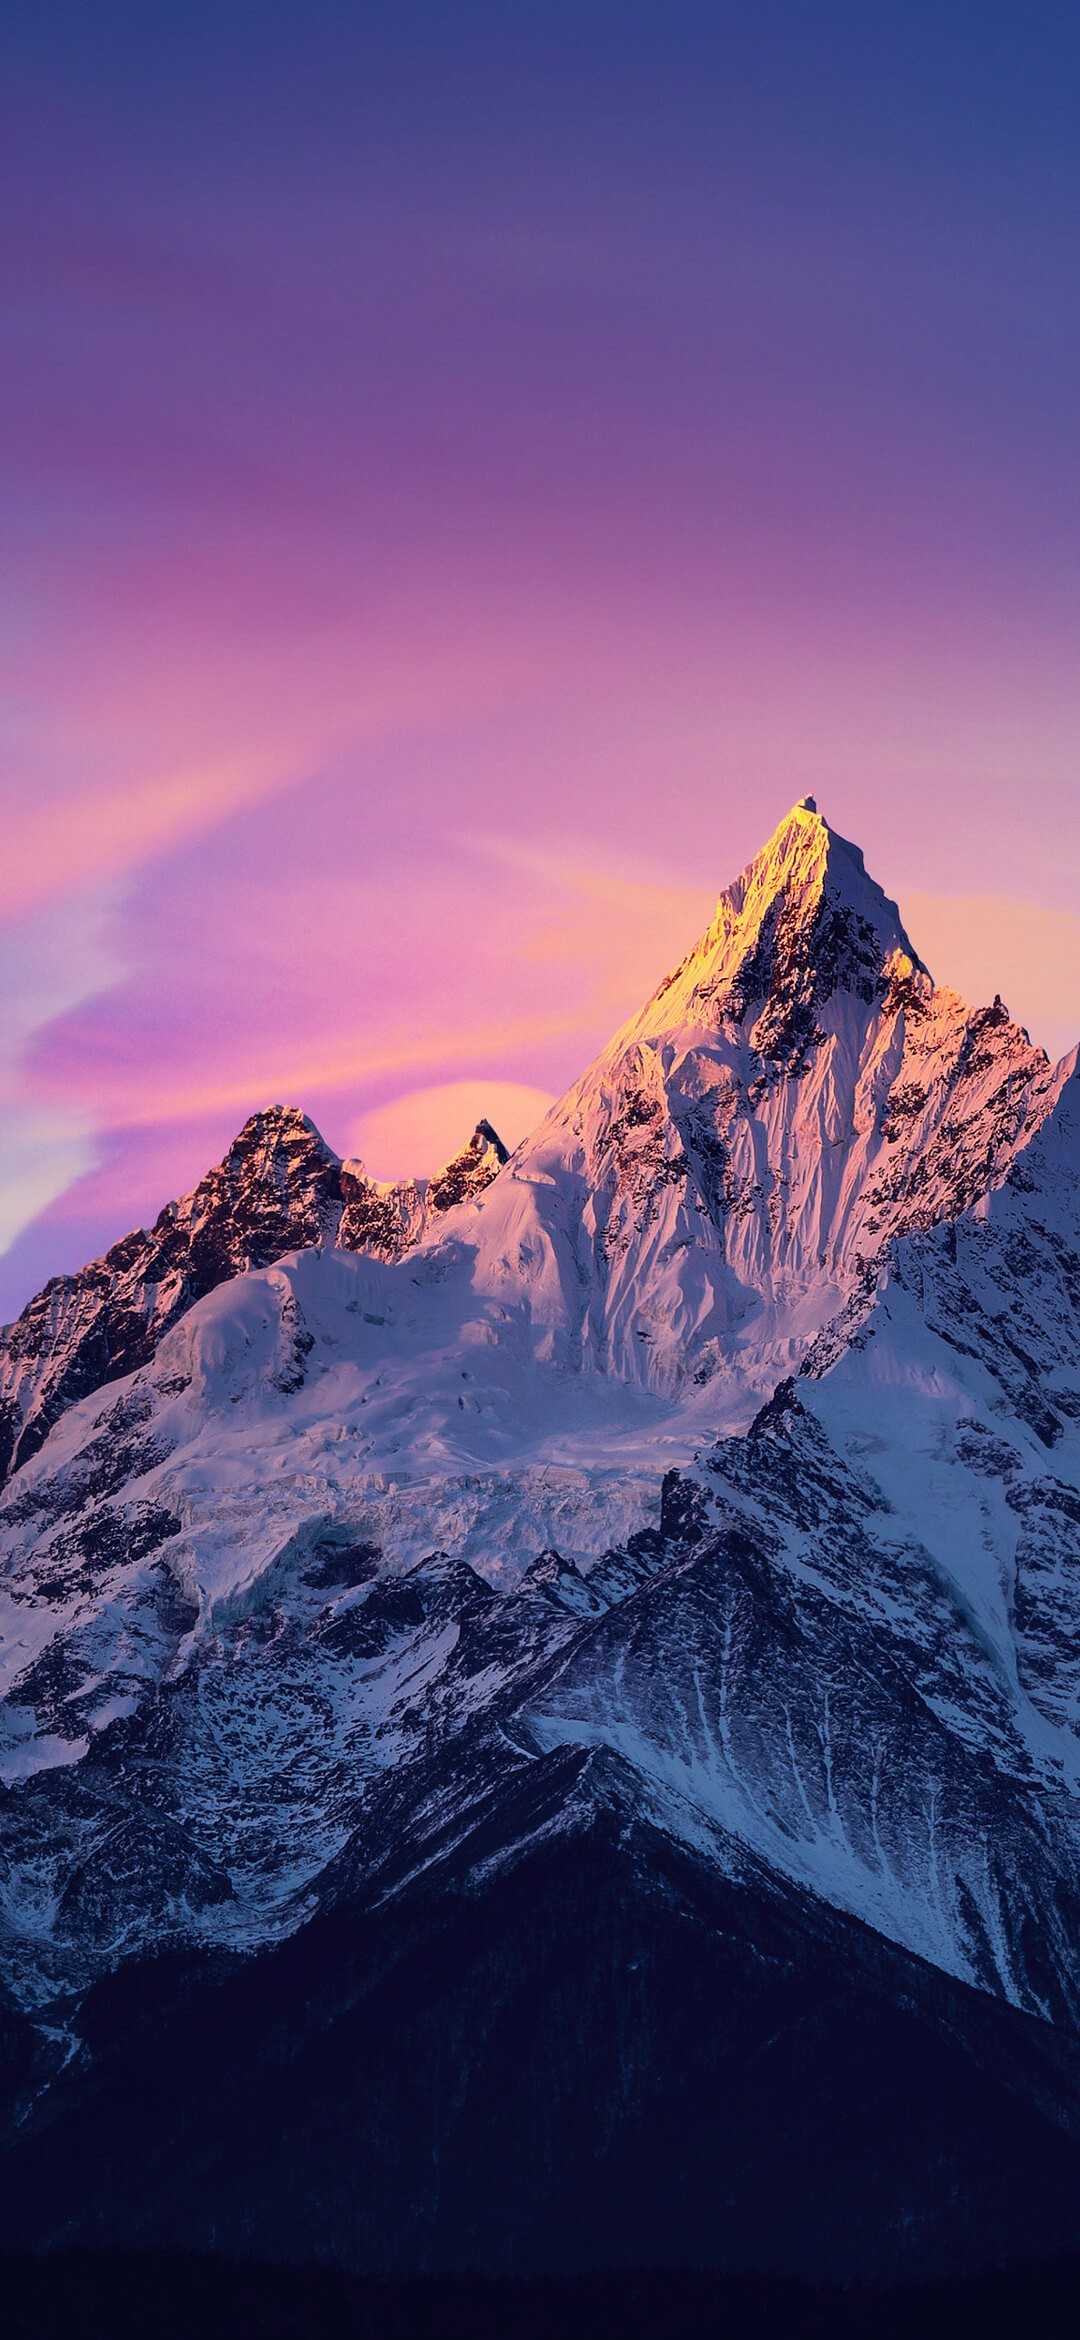 Snowy mountain peak with a purple sky - Mountain